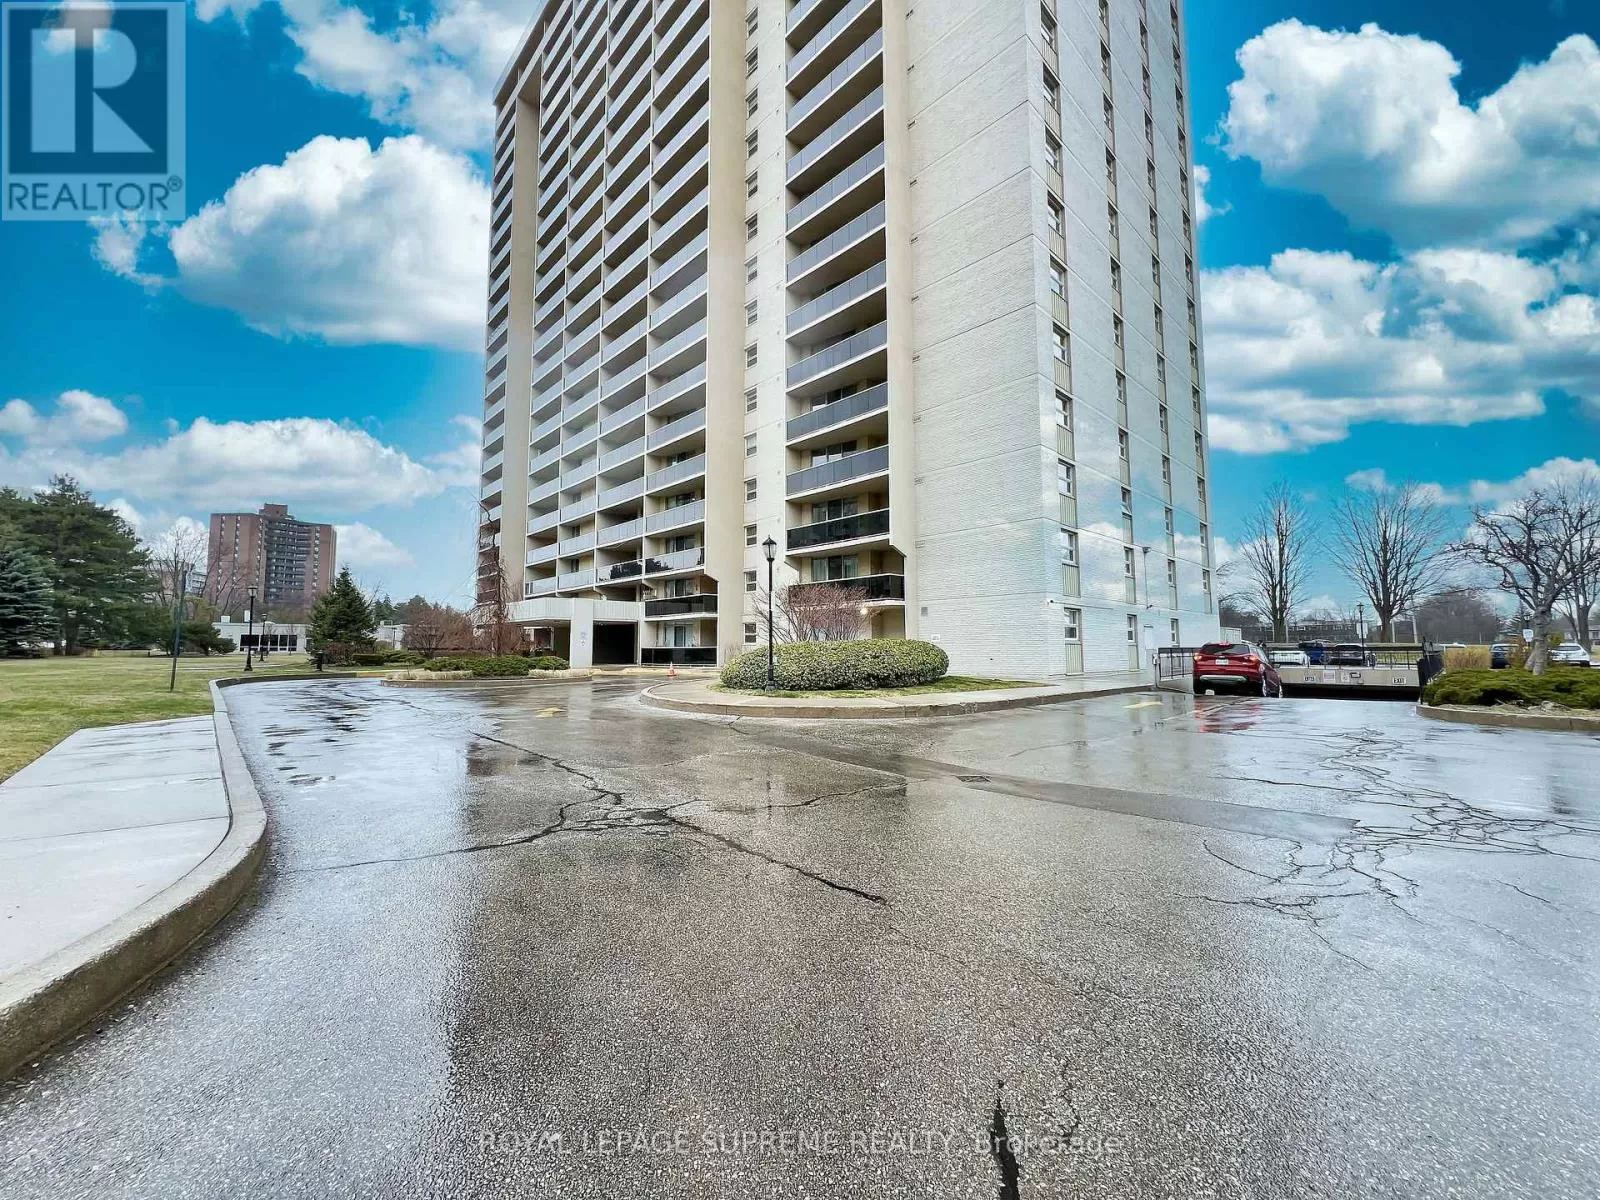 Apartment for rent: 205 - 299 Mill Road Road, Toronto, Ontario M9C 4V9